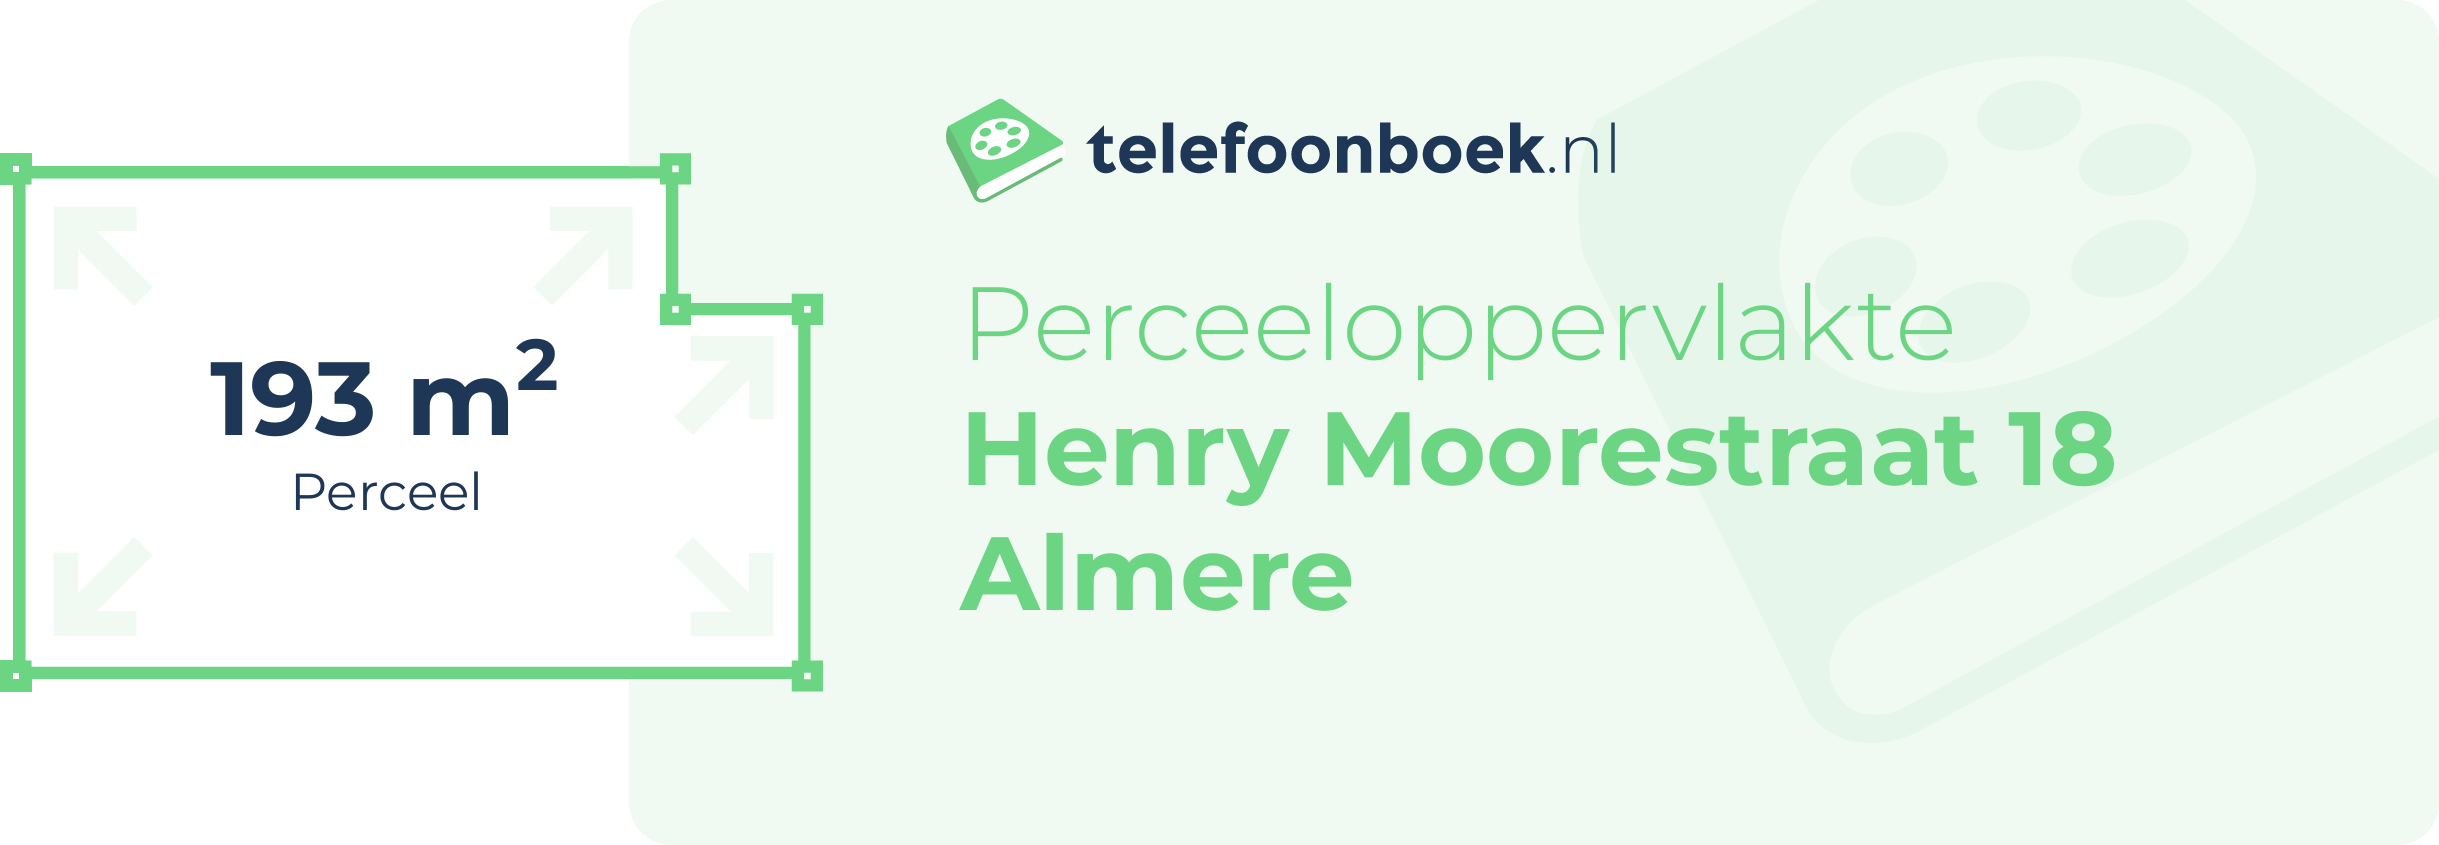 Perceeloppervlakte Henry Moorestraat 18 Almere